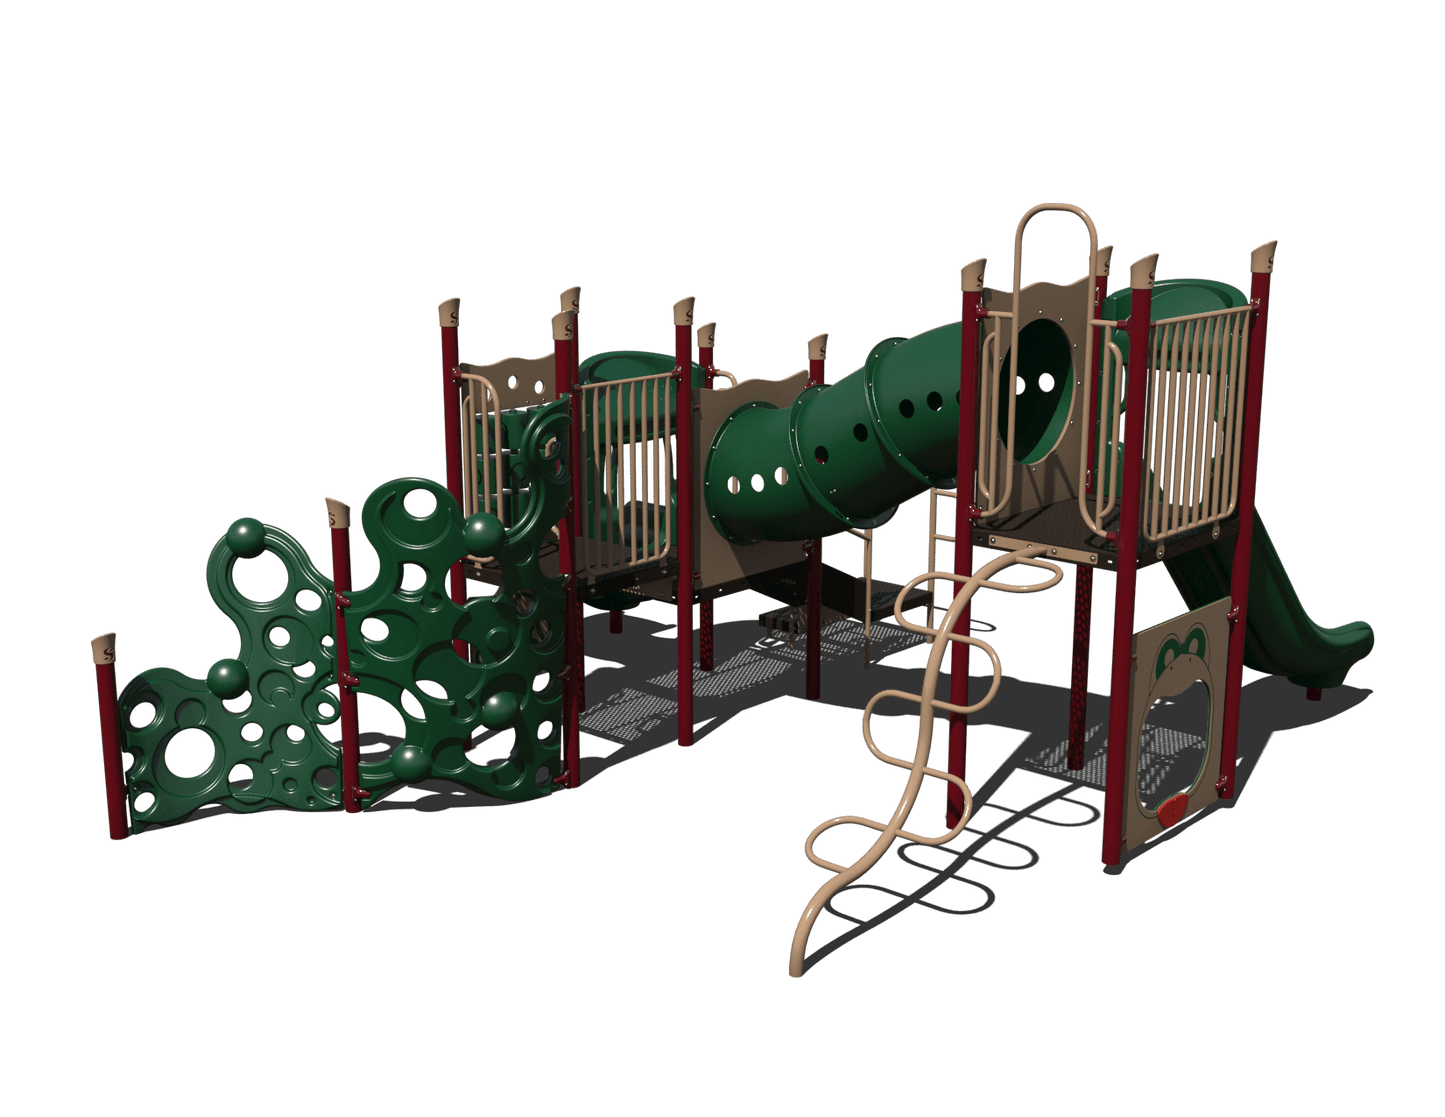 Poseiden's Playground